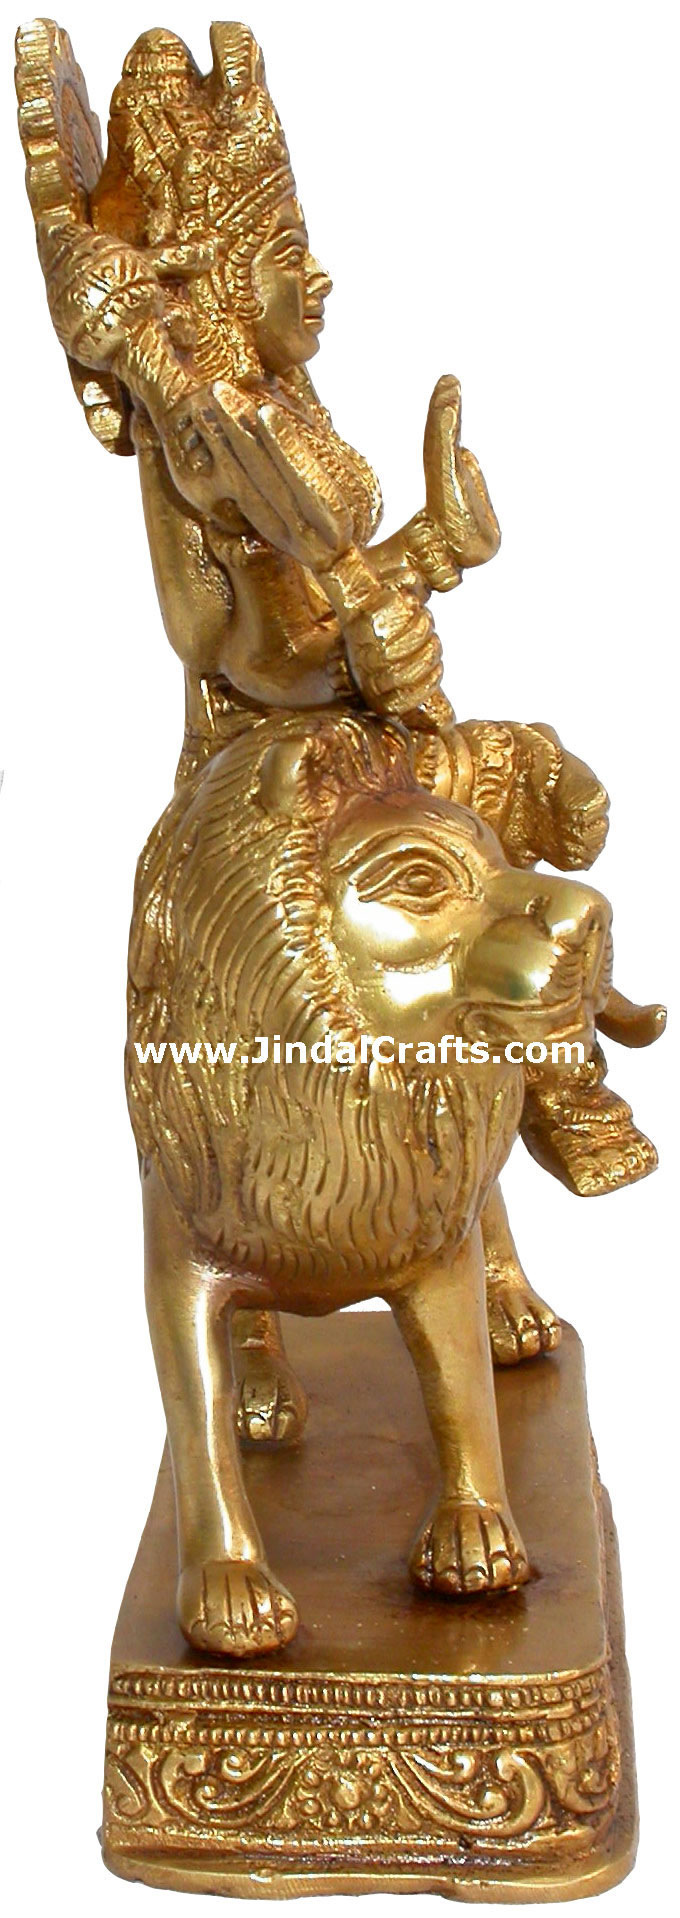 Maa Durga Kali Indian Goddess Figurines Brass Gifts Art